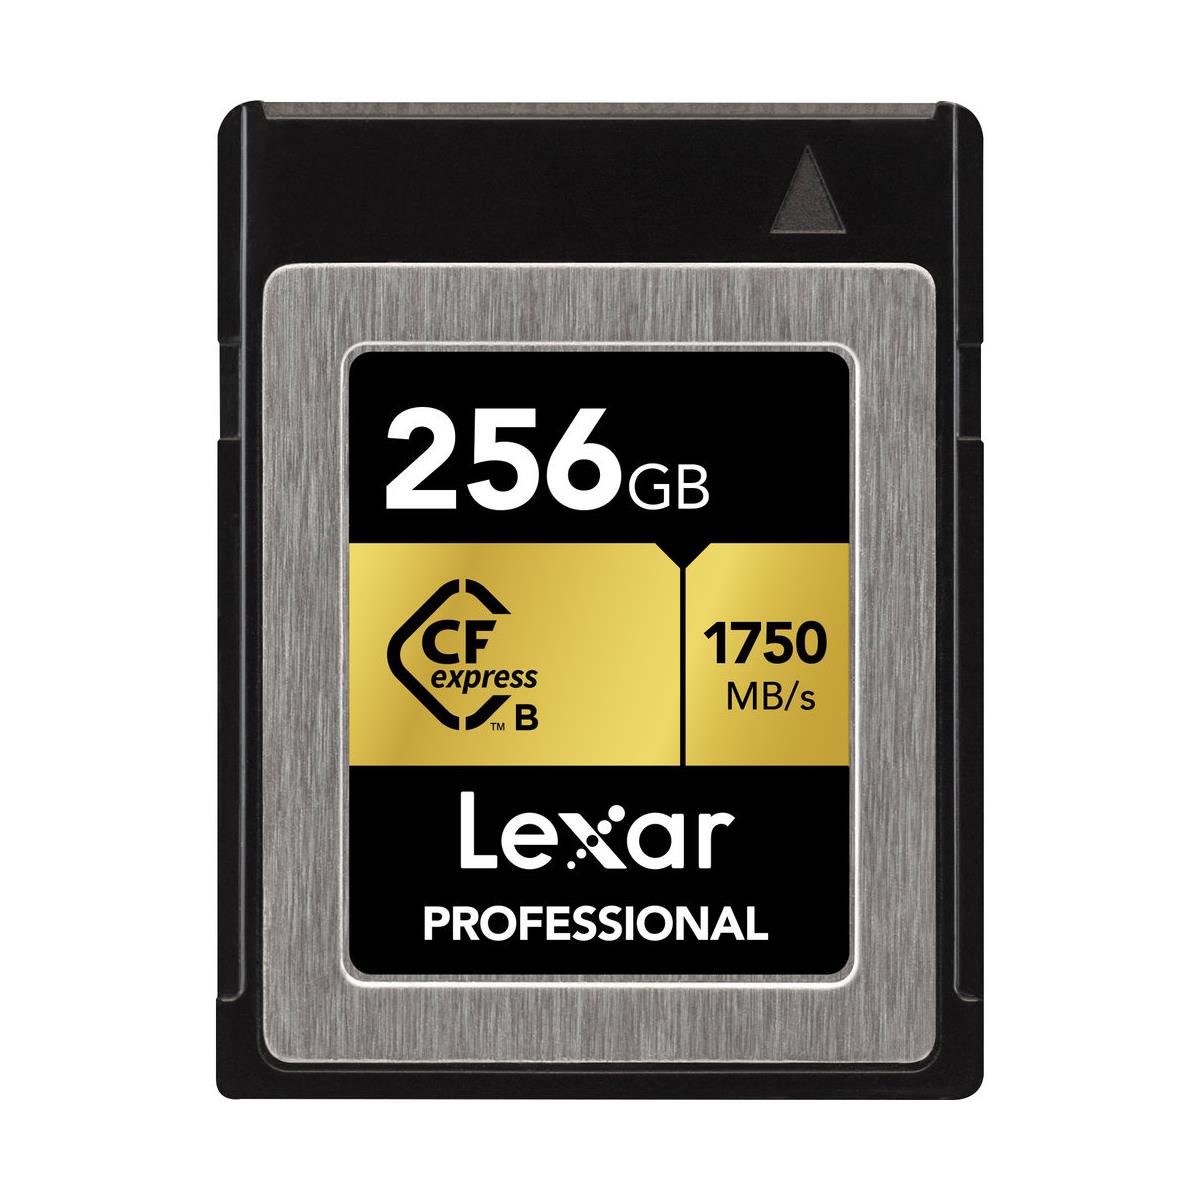 Lexar CFExpress Type-B 256 GB 1750 MB/s Memory Card